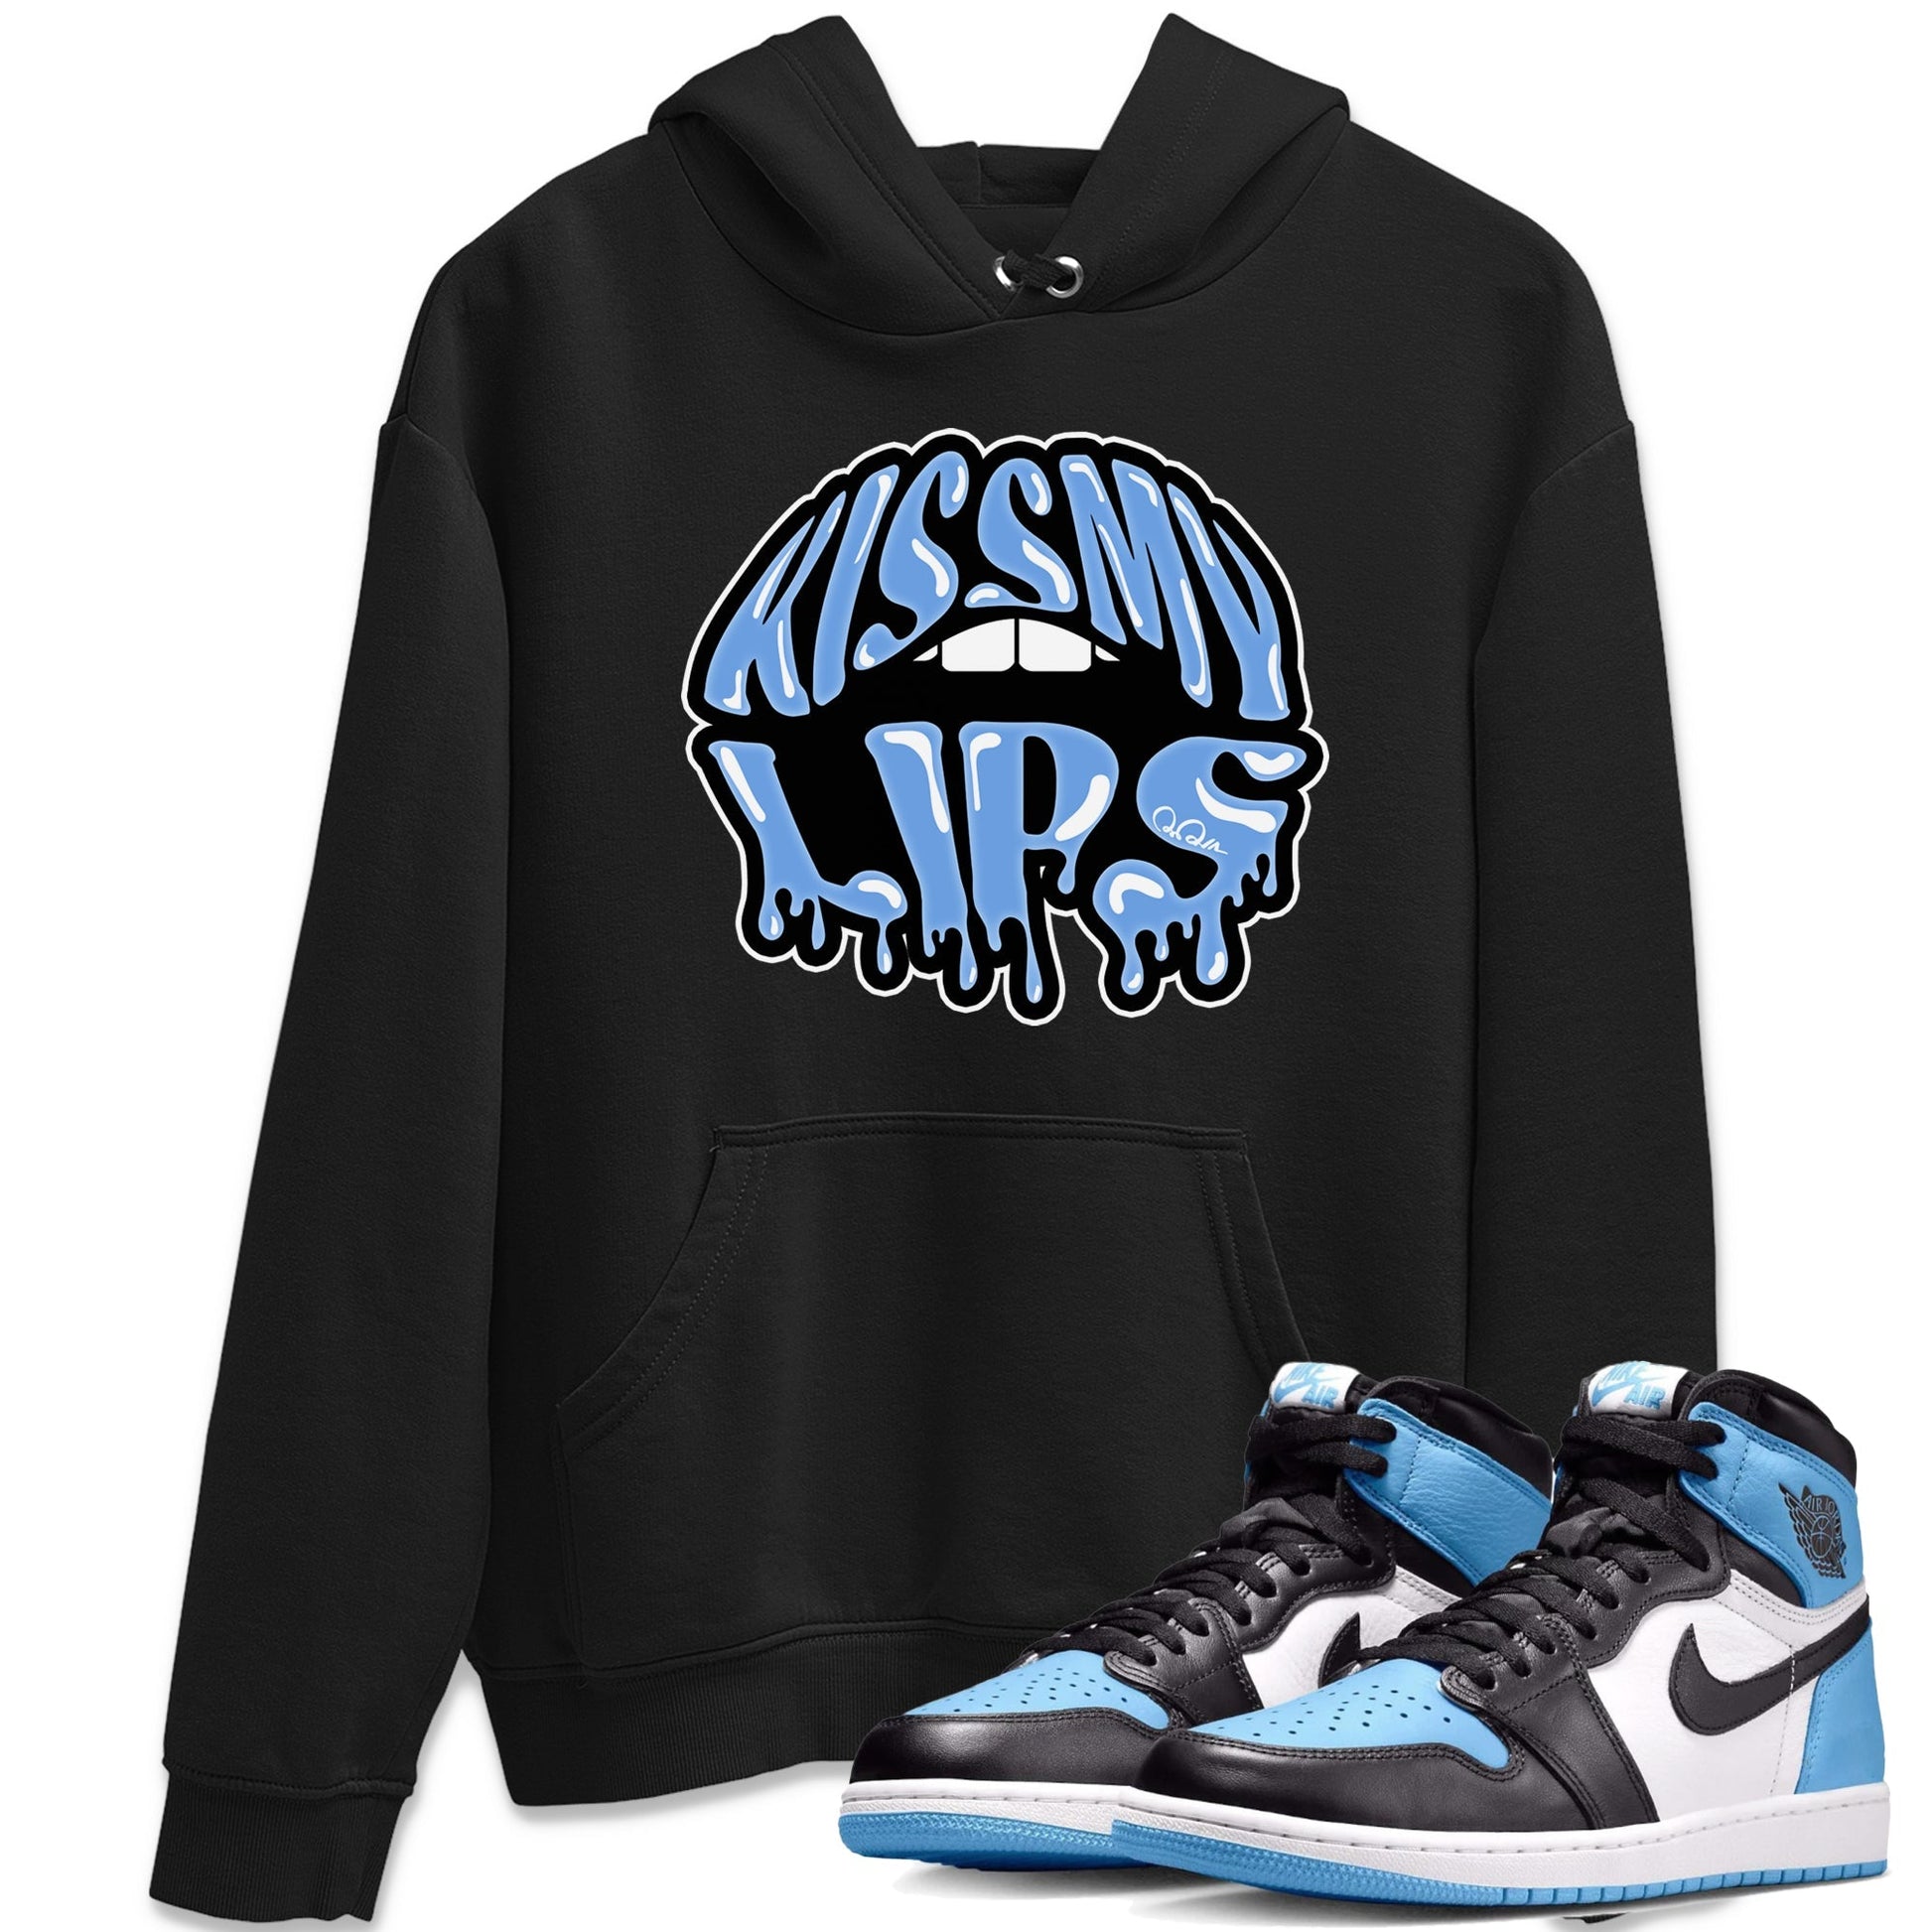 Air Jordan 1 University Blue Sneaker Match Tees Kiss My Lips Sneaker Tees AJ1 High OG University Blue Sneaker Release Tees Unisex Shirts Black 1